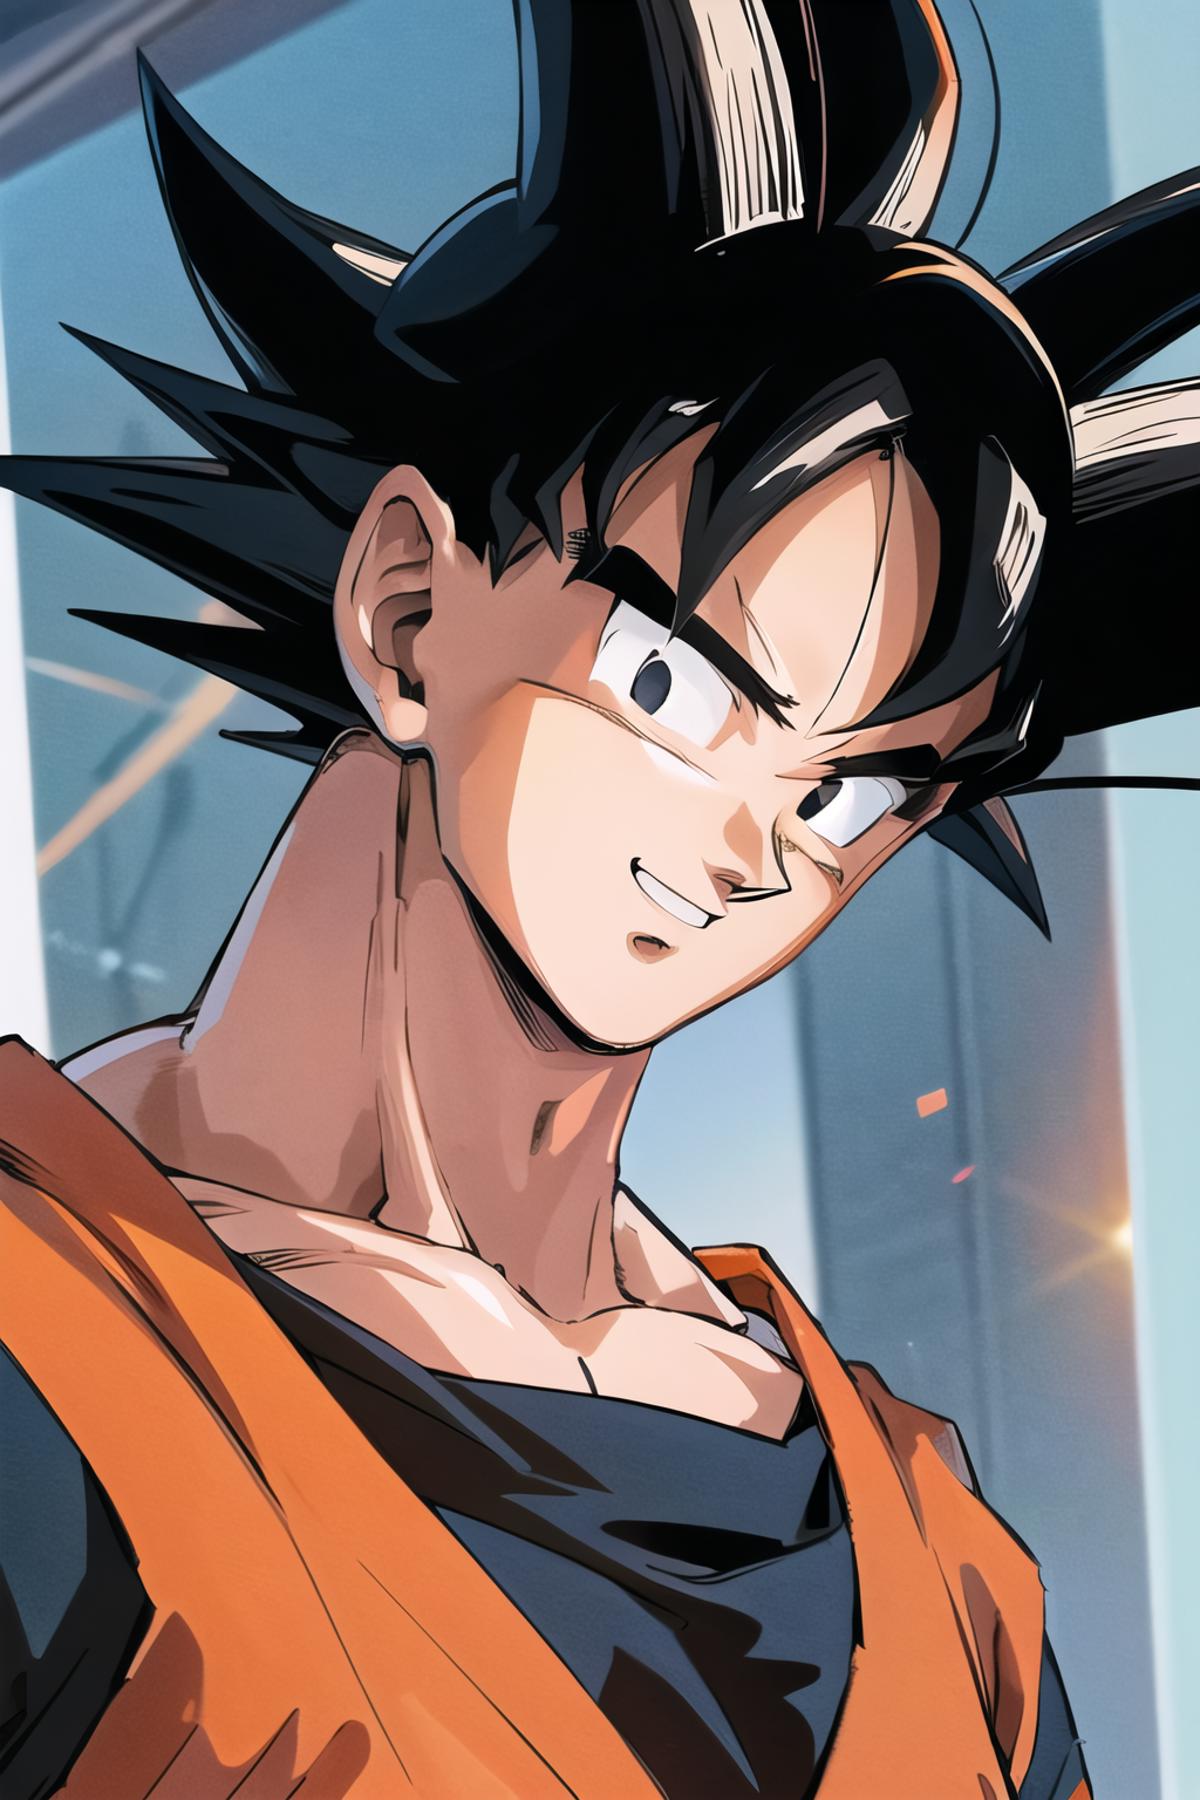 Goku(base form) image by deathgun1409